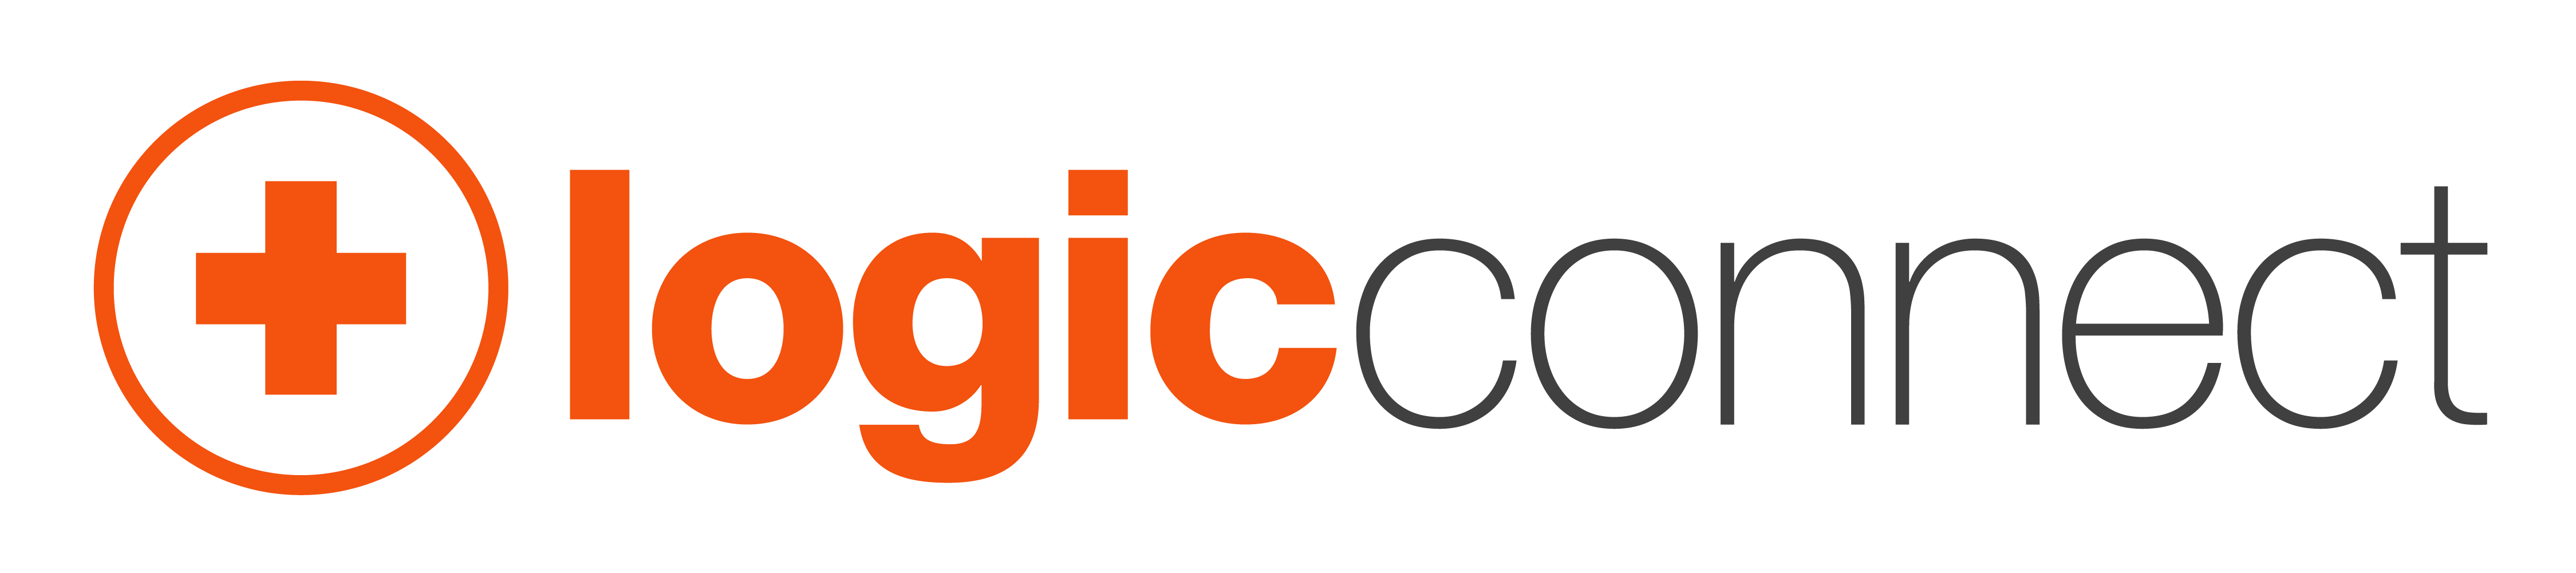 Logic Connect logo